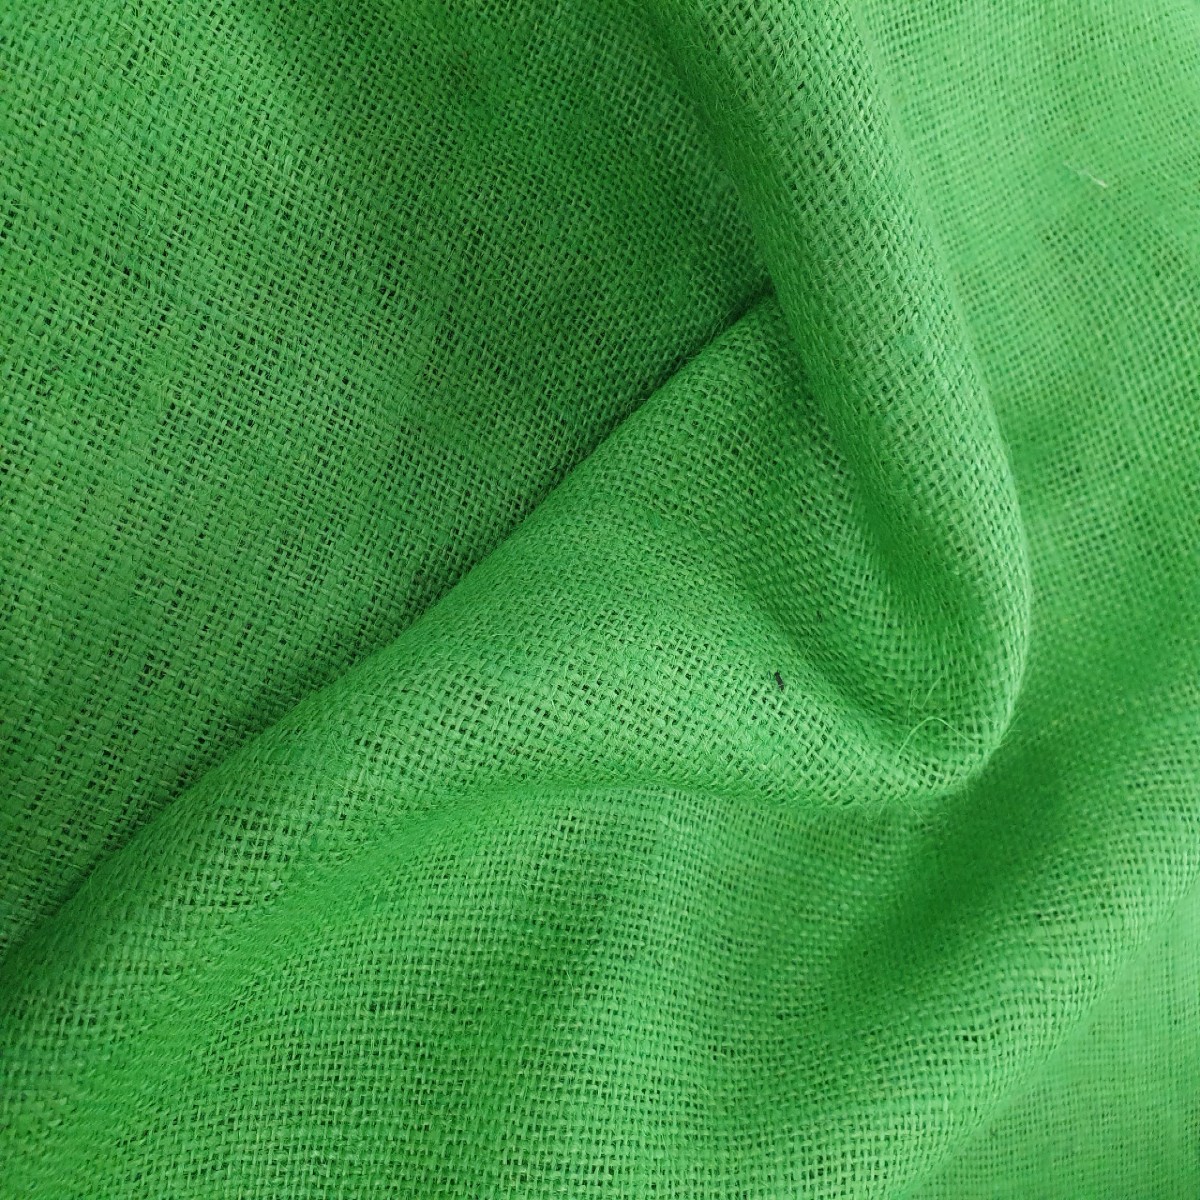 Hessian fabric soft Jute cloth | Fabric UK